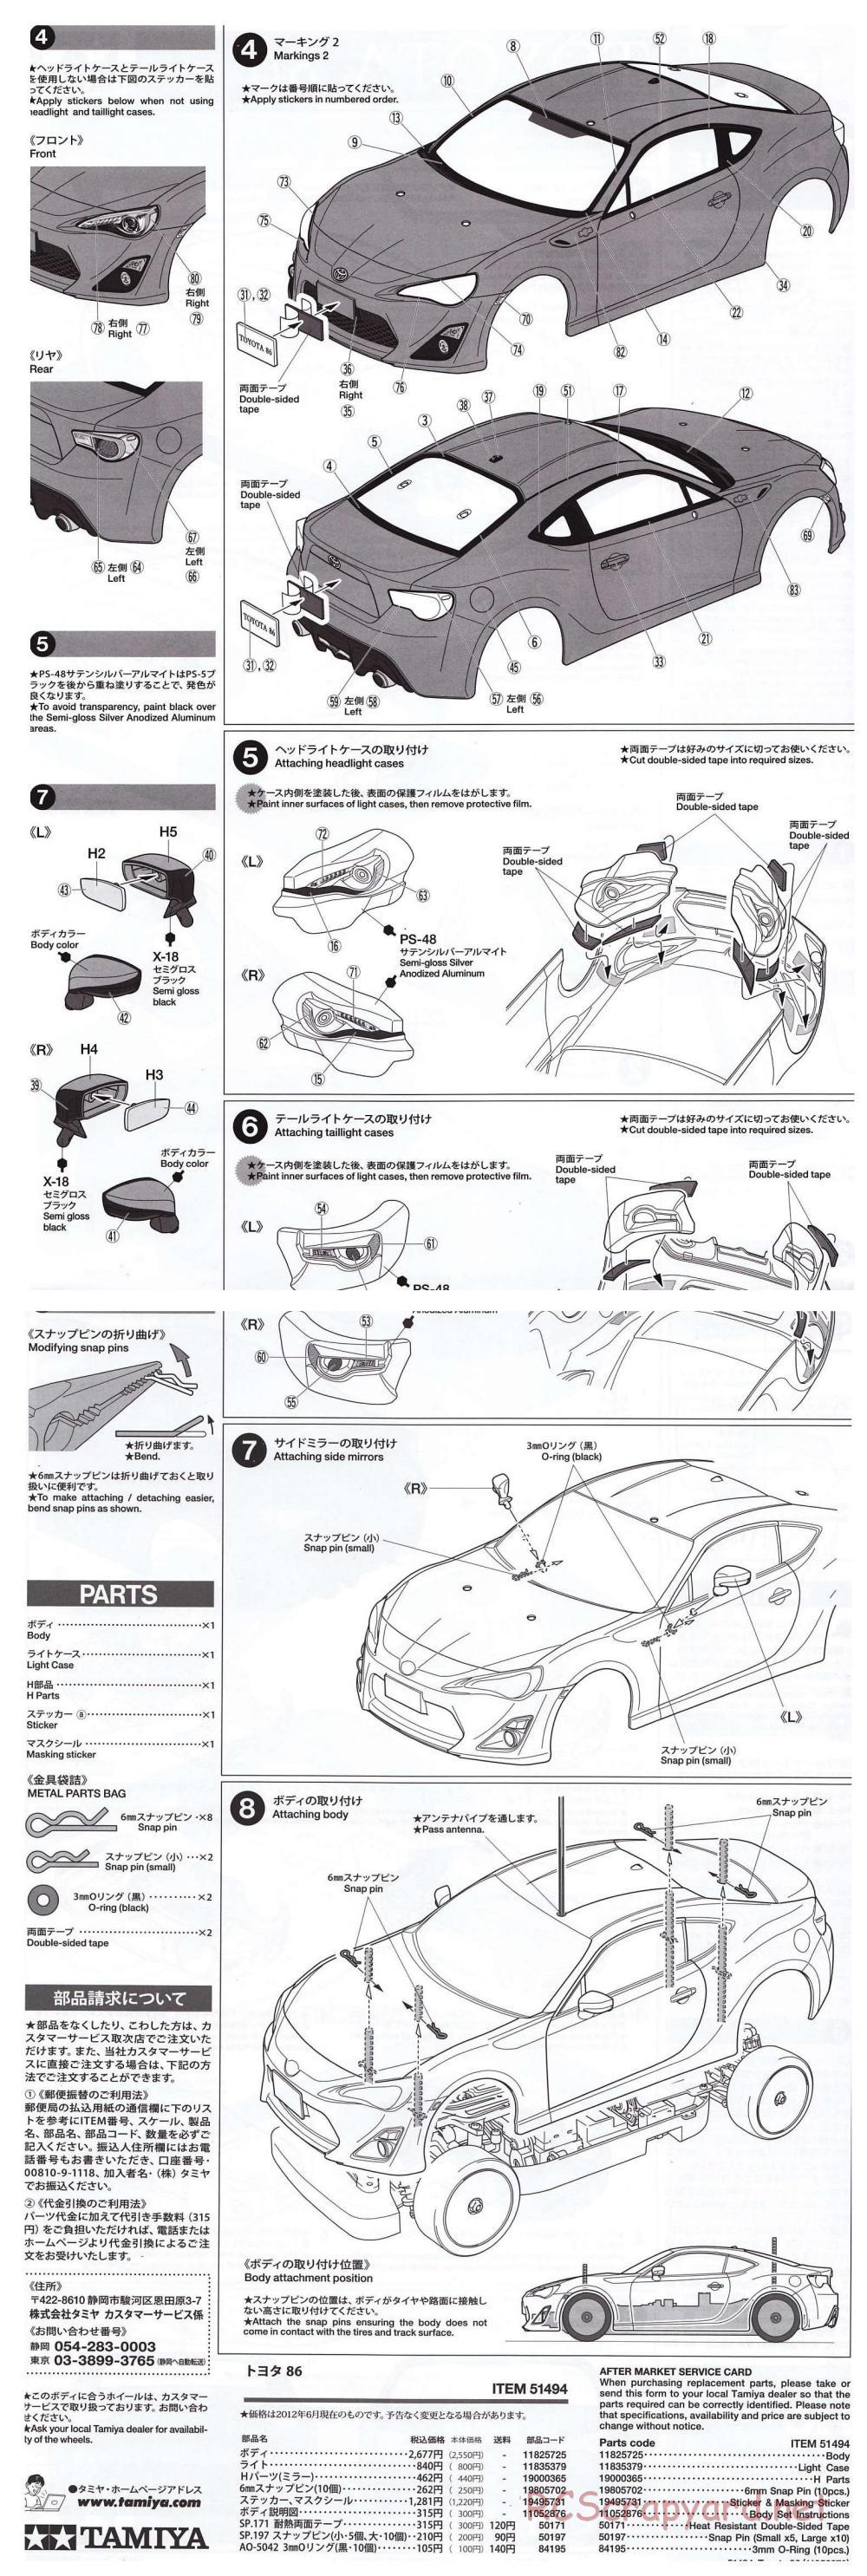 Tamiya - Toyota 86 - TA06 Chassis - Body Manual - Page 2